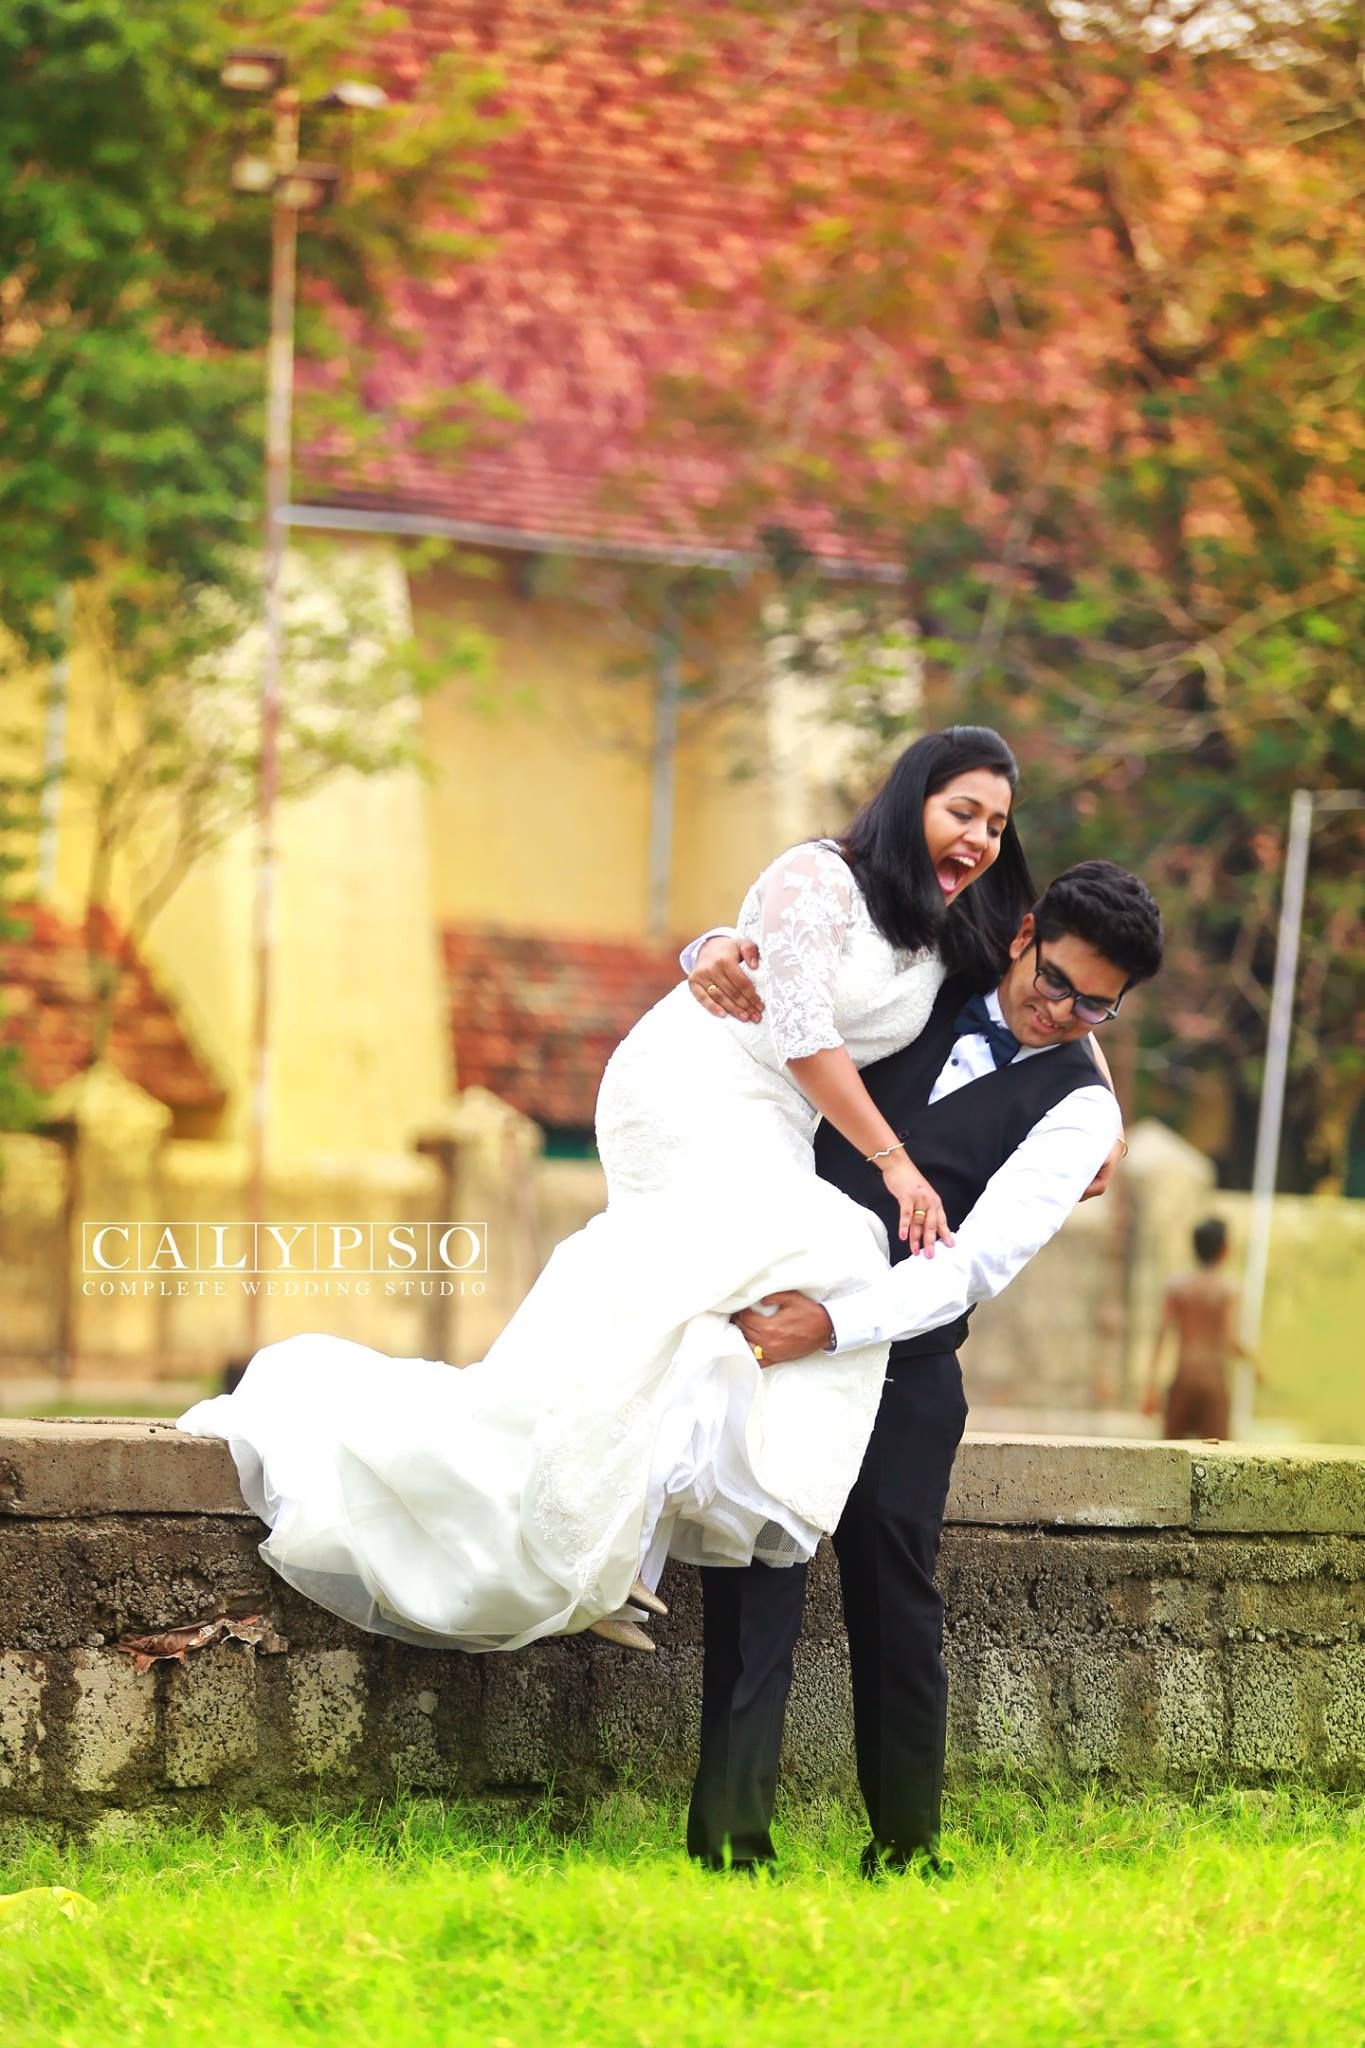 Wedding Photography - Capture Precious Moments